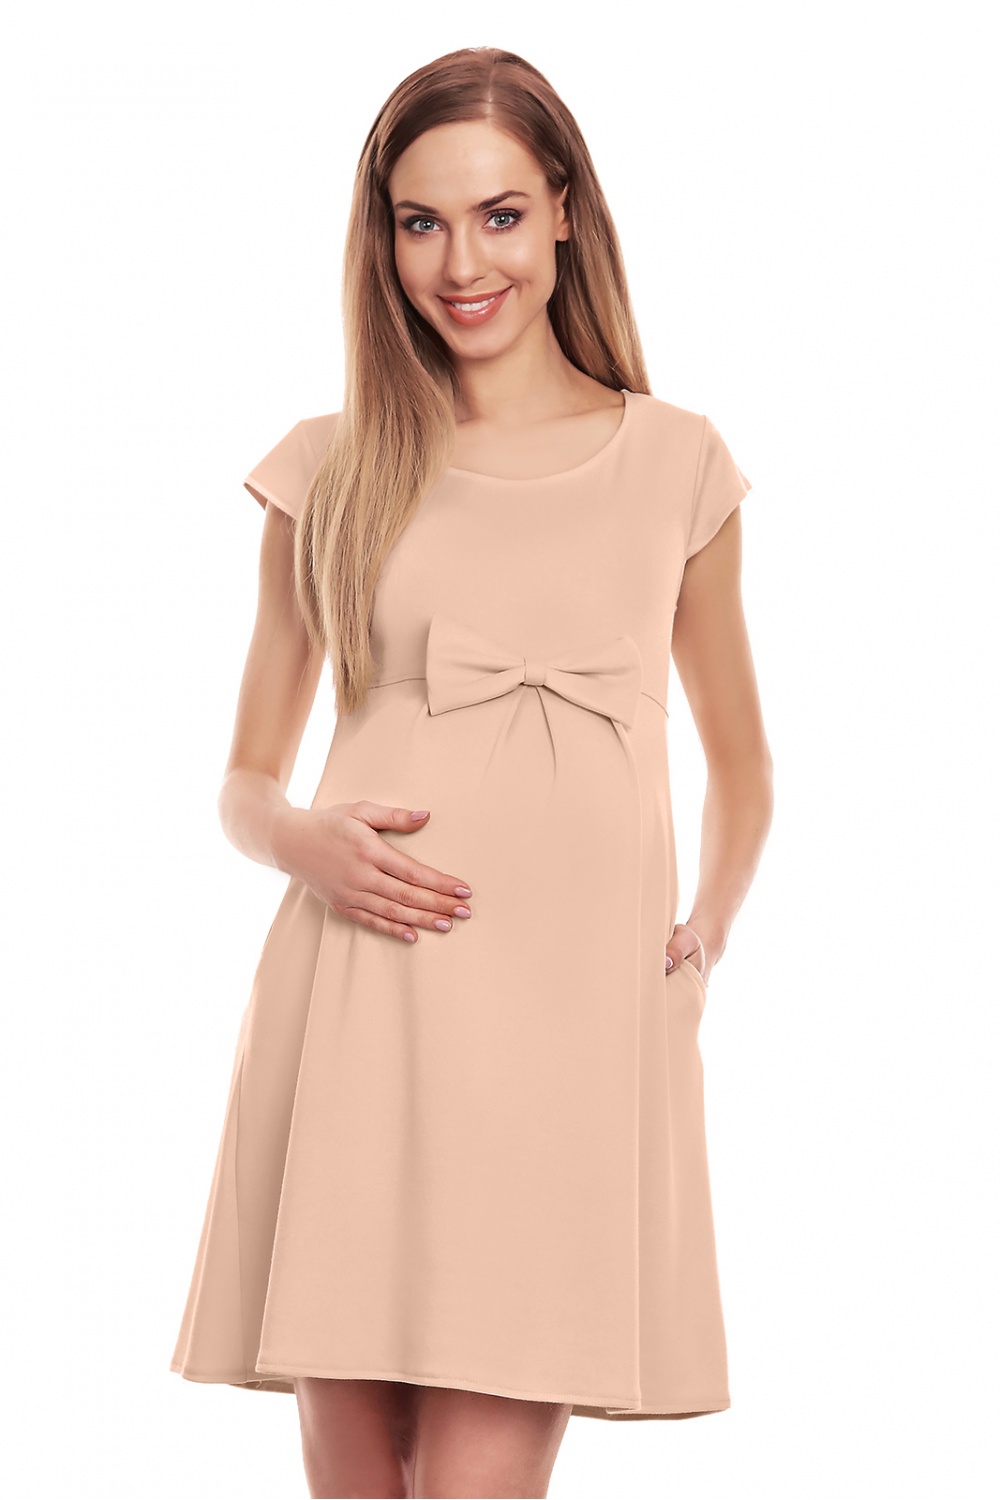 Pregnancy dress model 131969 P..